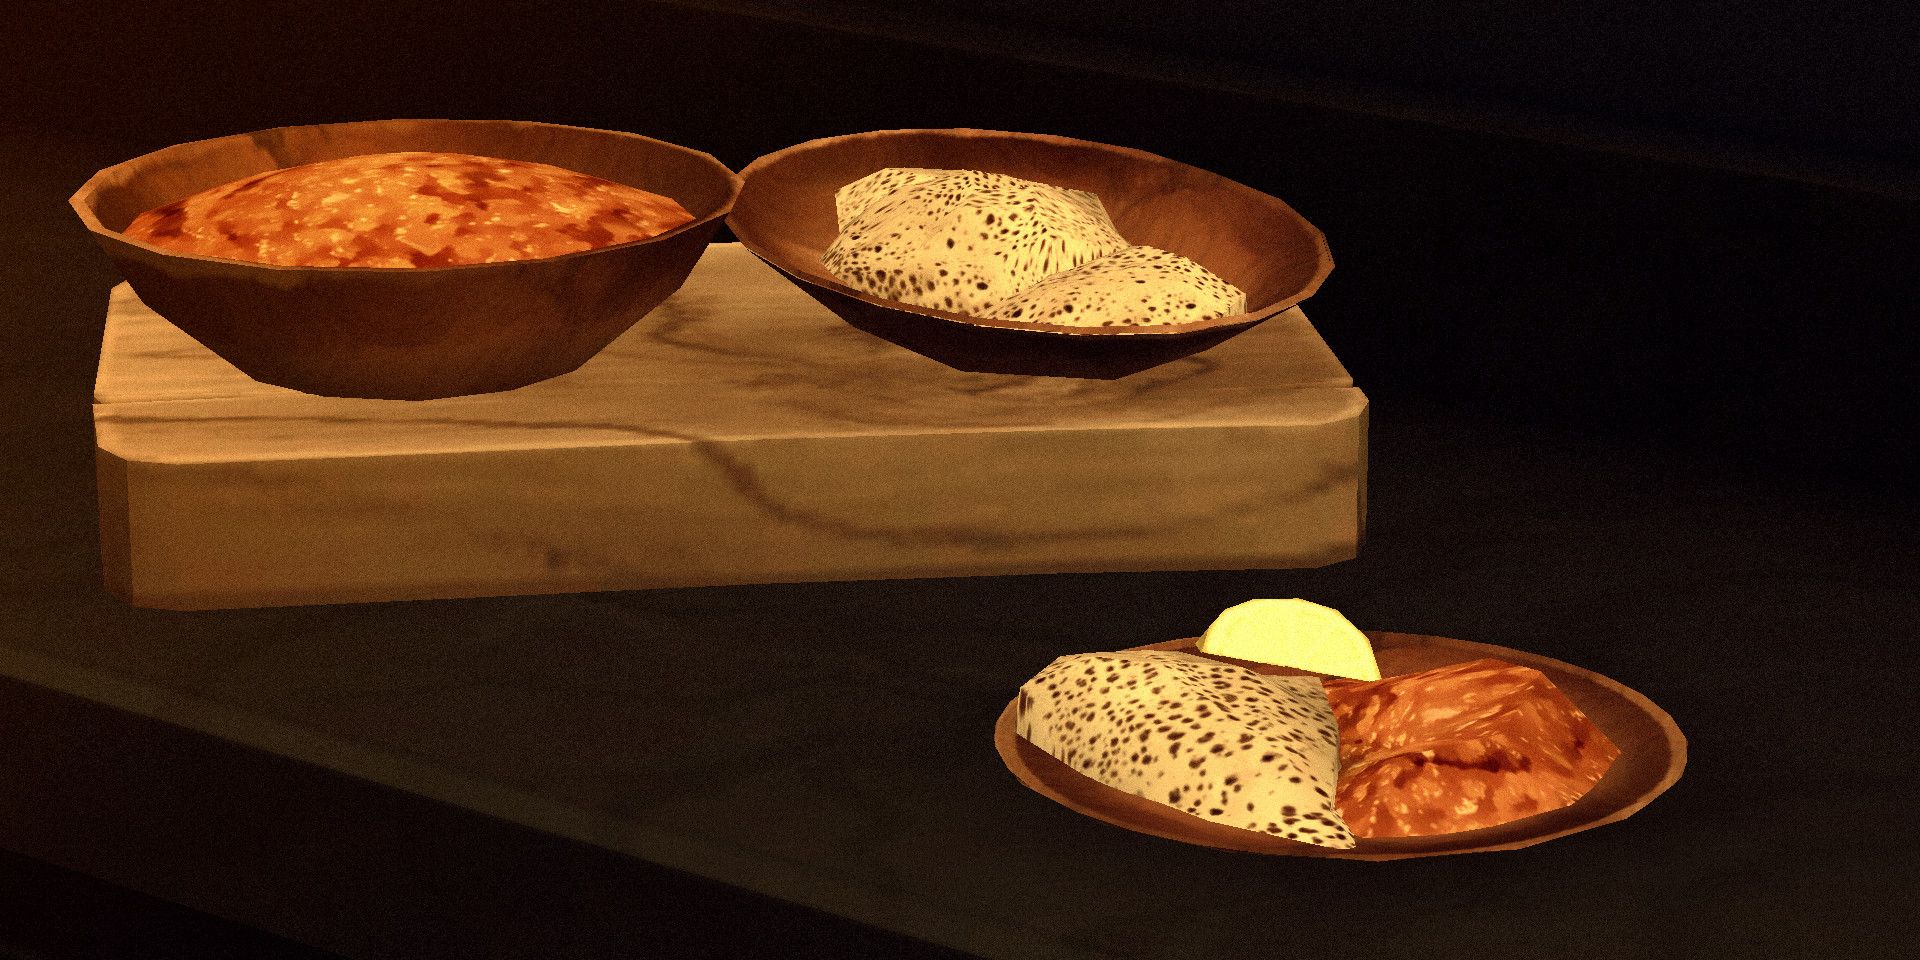 Screenshot of The Sims 4 showing communal bowls of misir wat and injera.